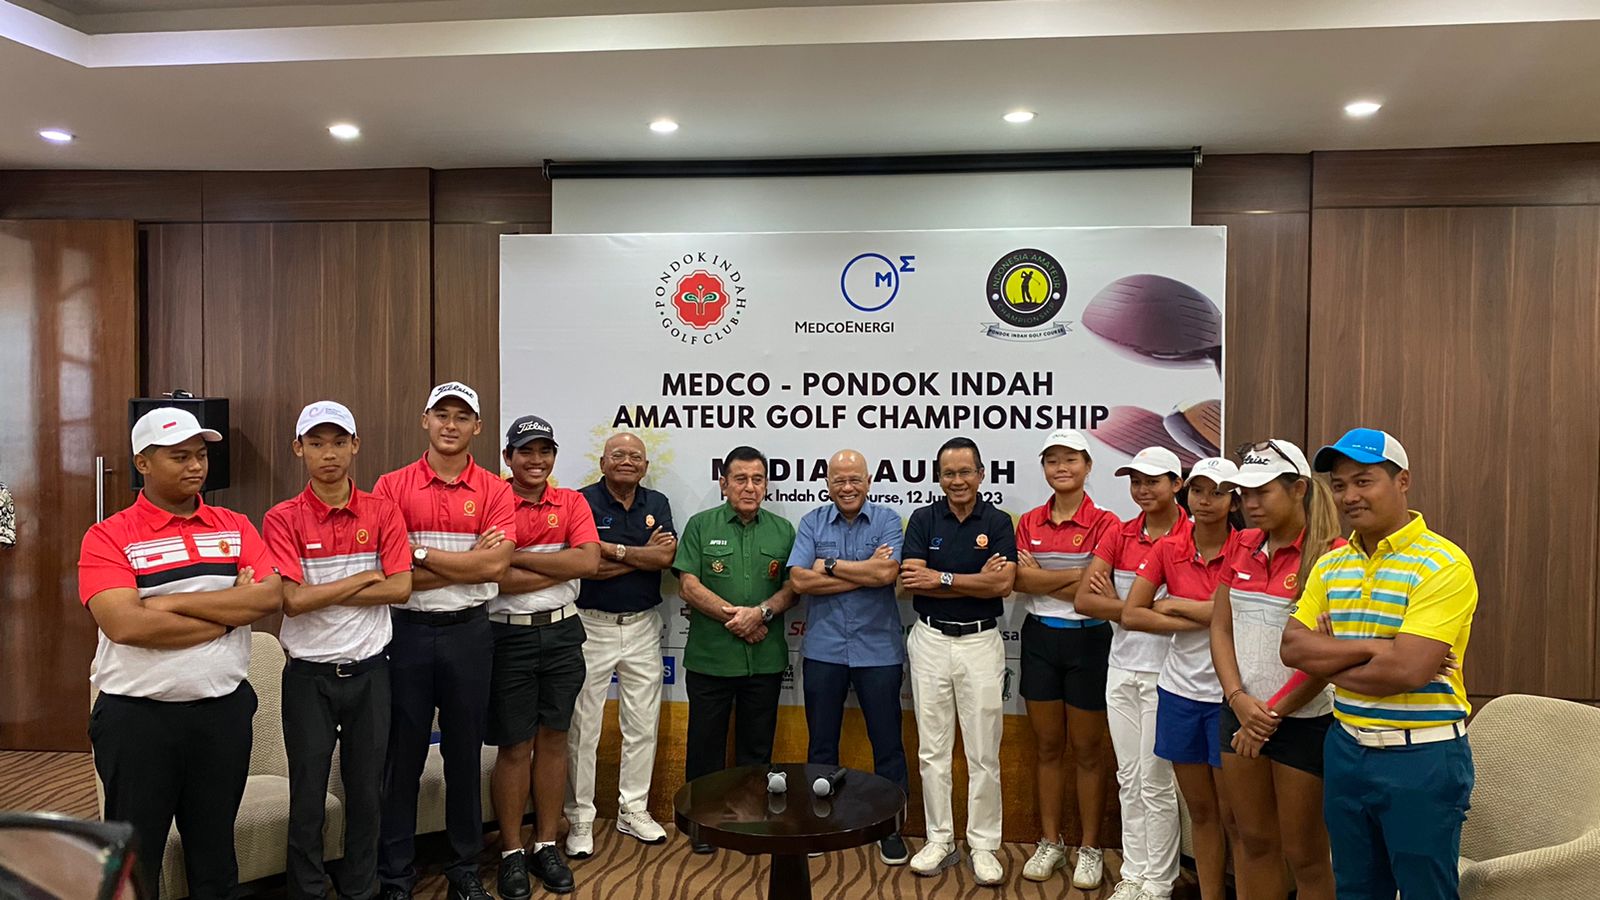 Pondok Indah Golf Club Bakar Semangat Atlet Golf Muda Indonesia